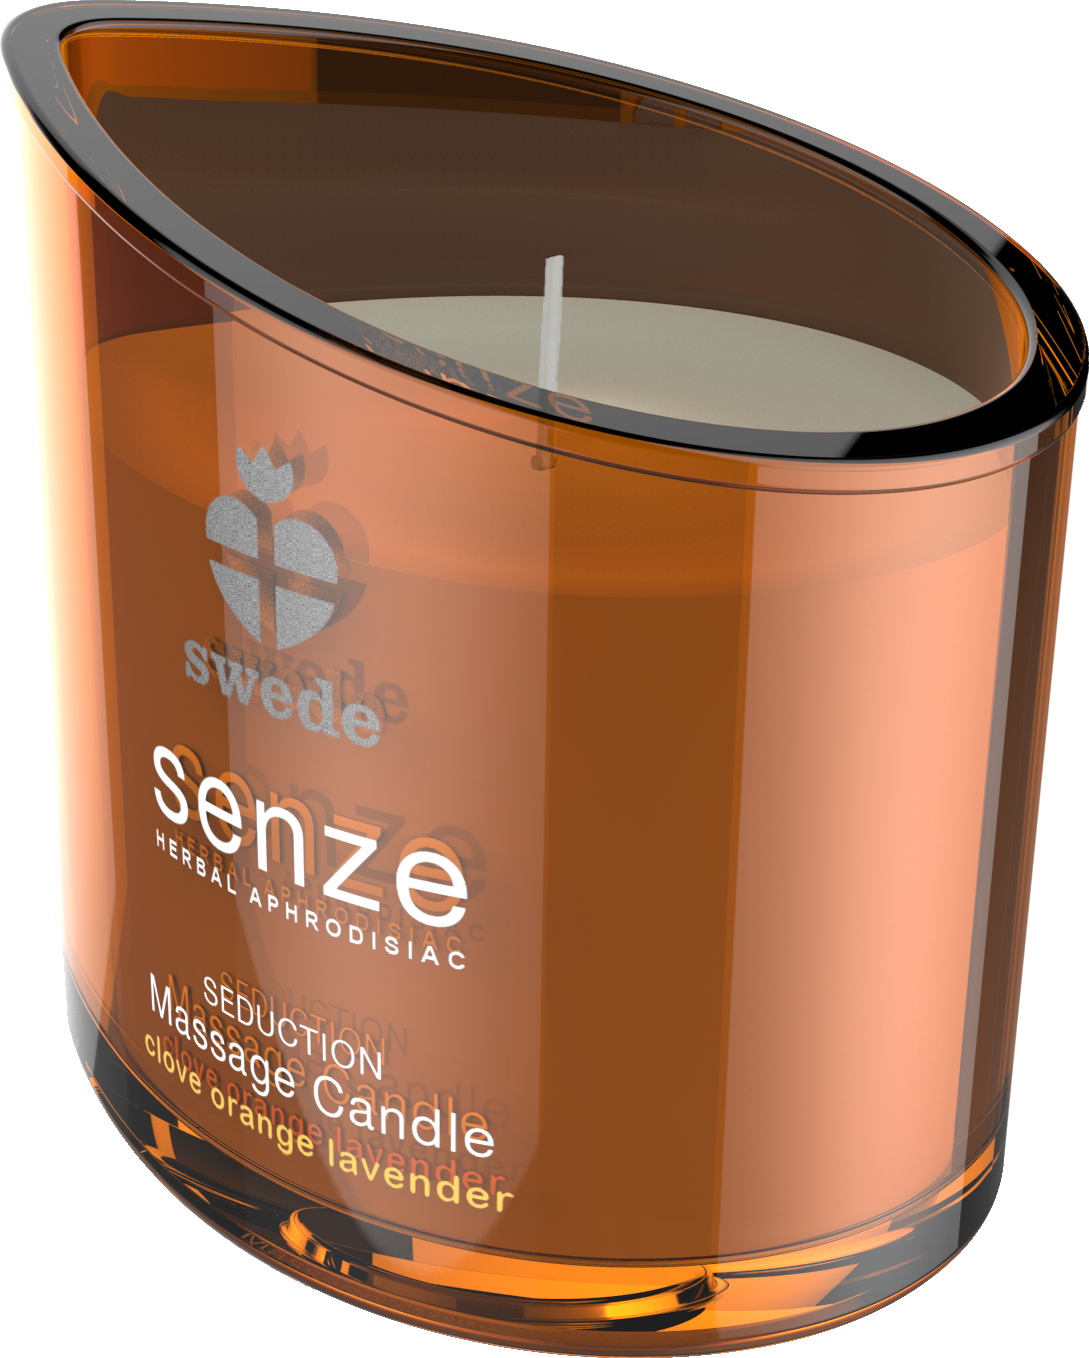 Swede Seduction Massage Candle - Clove Orange Lavender 50 ml